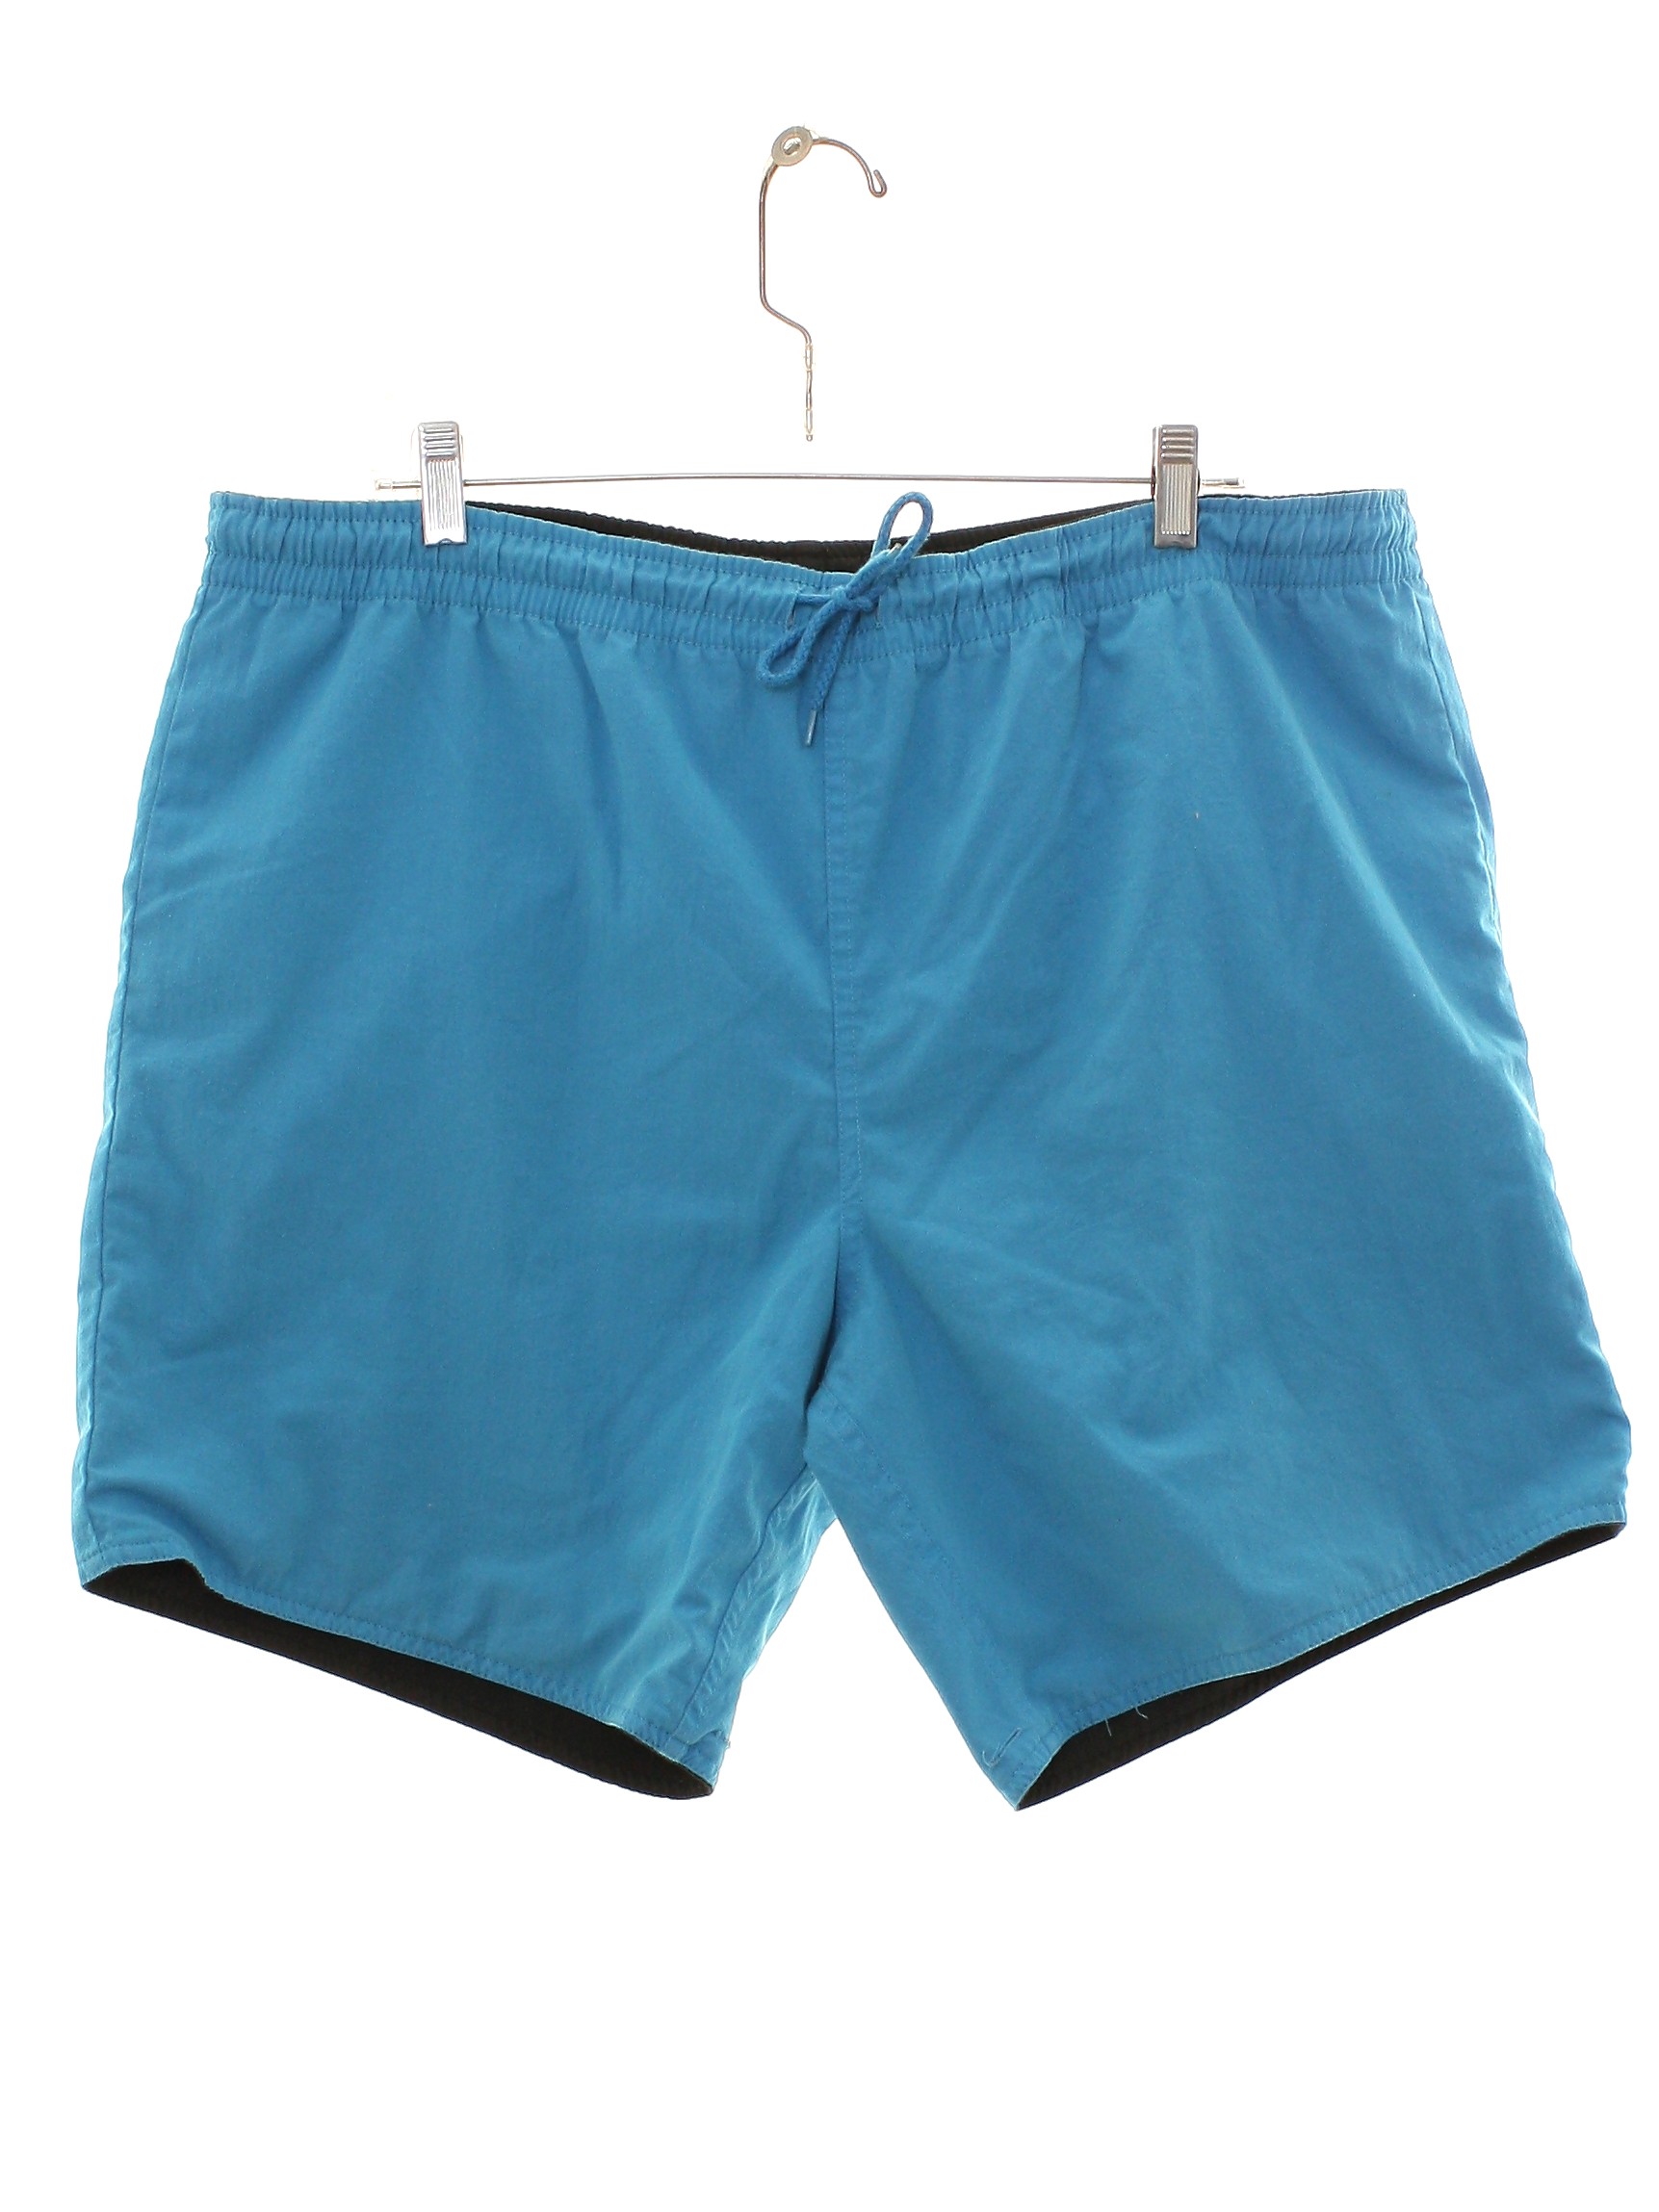 Jockey 90's Vintage Shorts: Early 90s -Jockey- Unisex tropical blue and ...